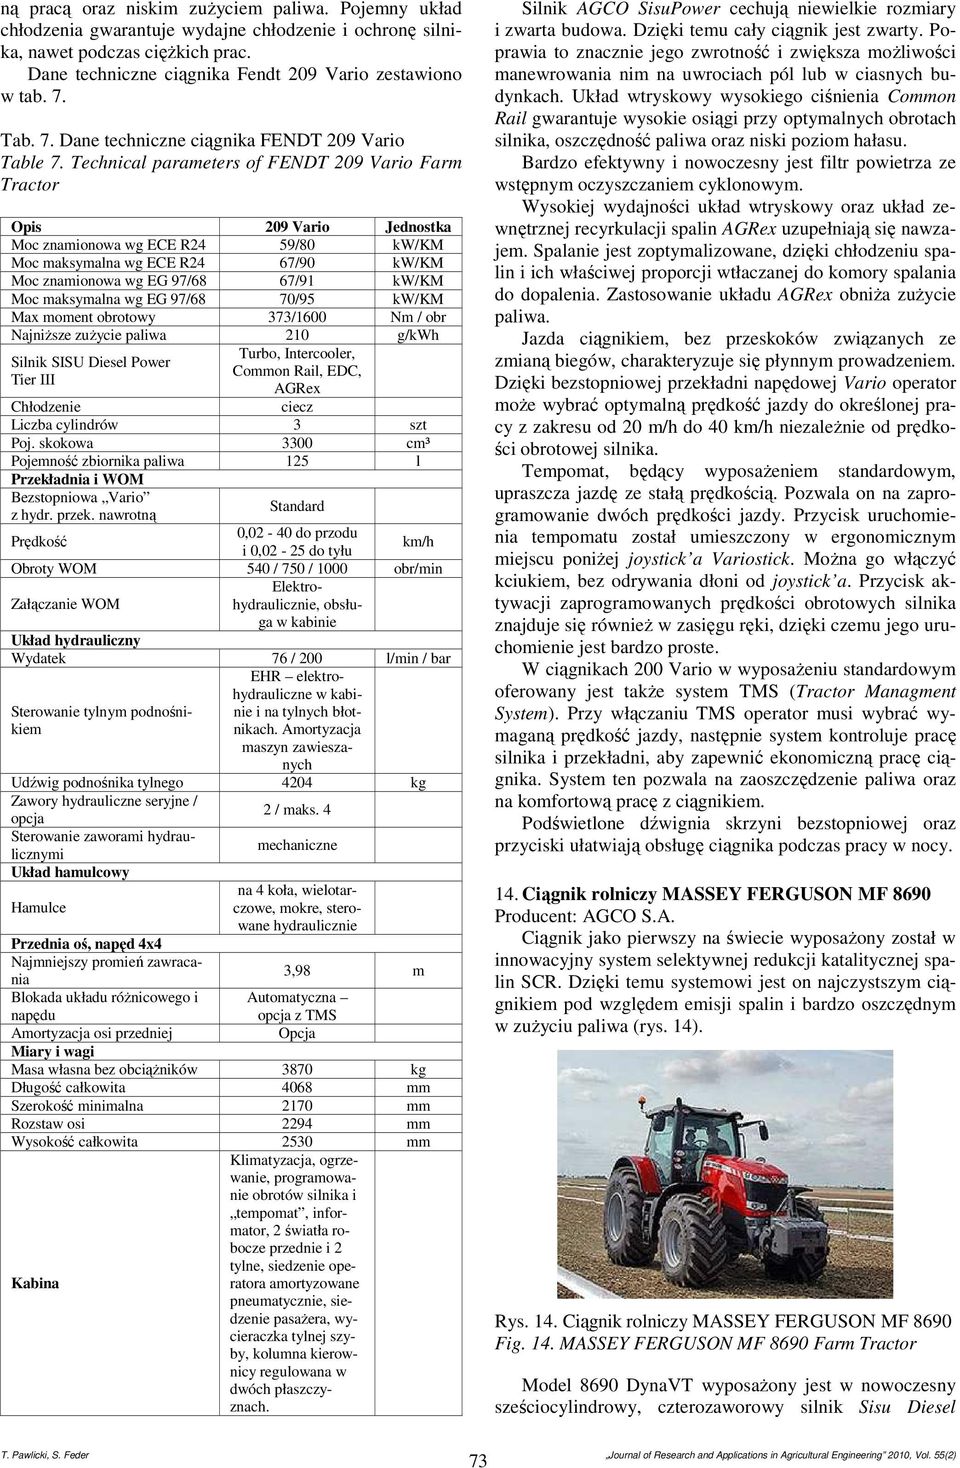 Technical parameters of FENDT 209 Vario Farm Tractor Opis 209 Vario Jednostka Moc znamionowa wg ECE R24 59/80 kw/km Moc maksymalna wg ECE R24 67/90 kw/km Moc znamionowa wg EG 97/68 67/91 kw/km Moc